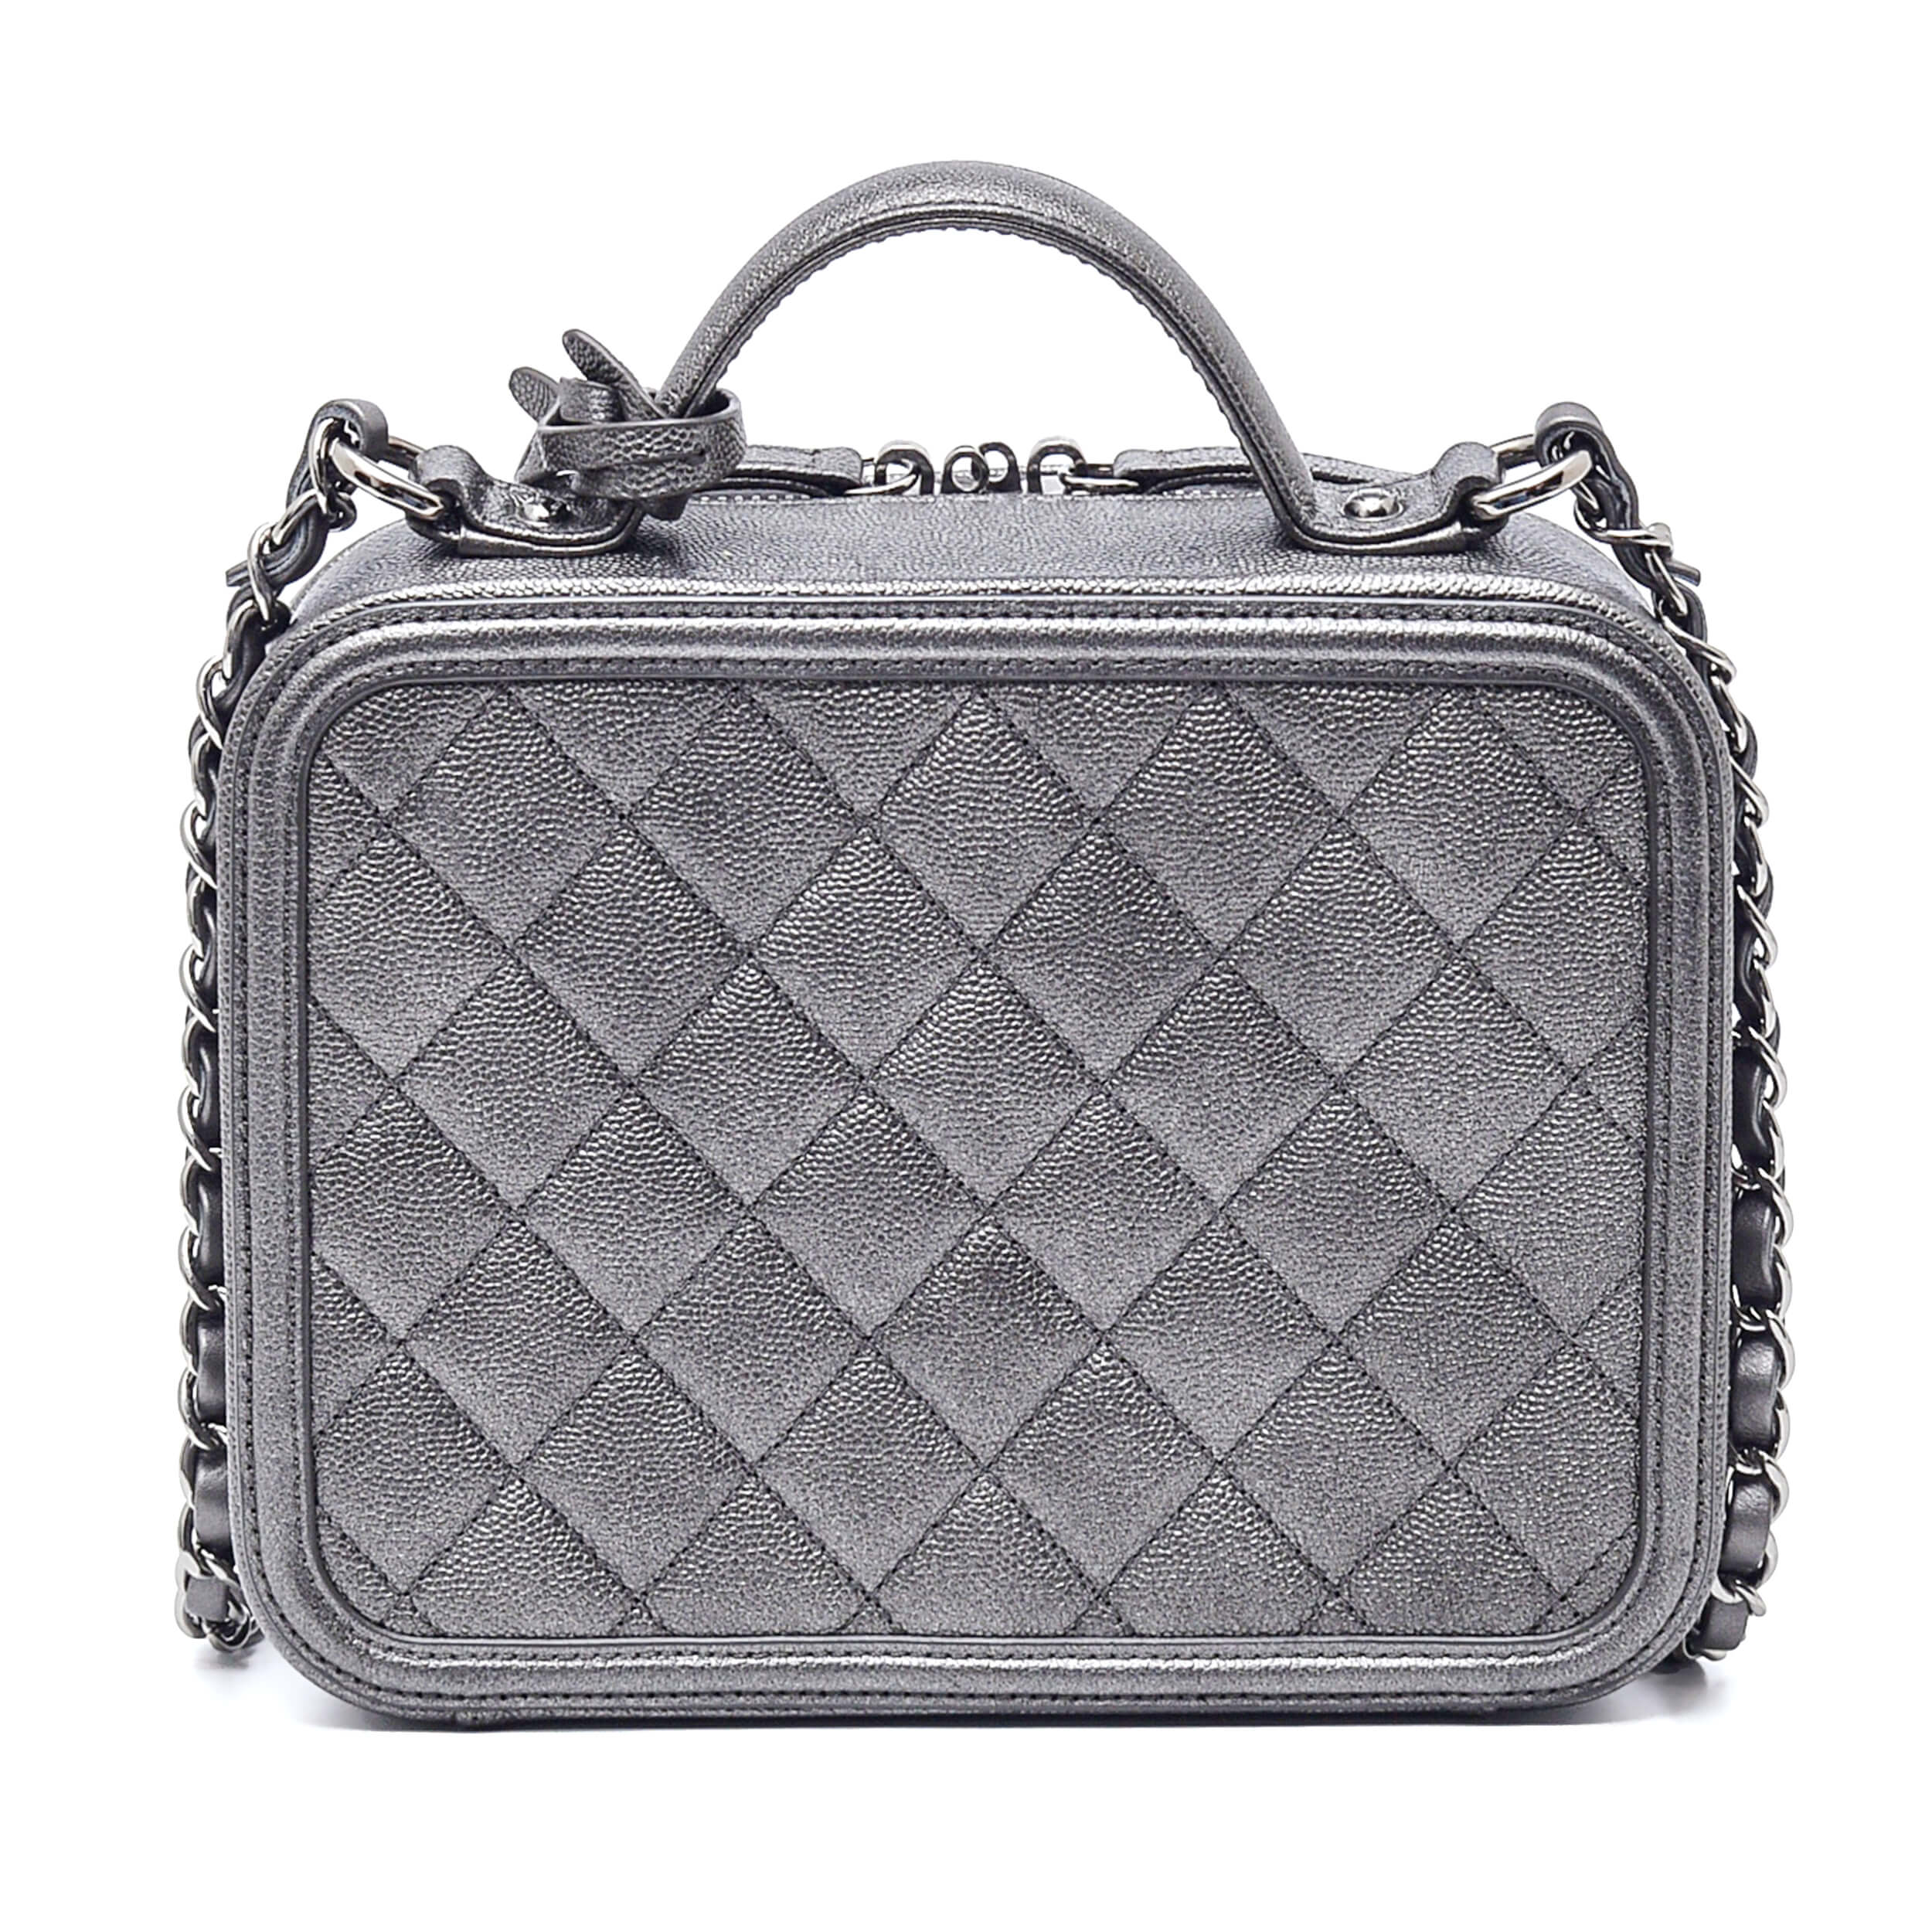 Chanel - Metallic Silver Quilted Caviar Leather Medium CC Filigree Vanity Case Bag 